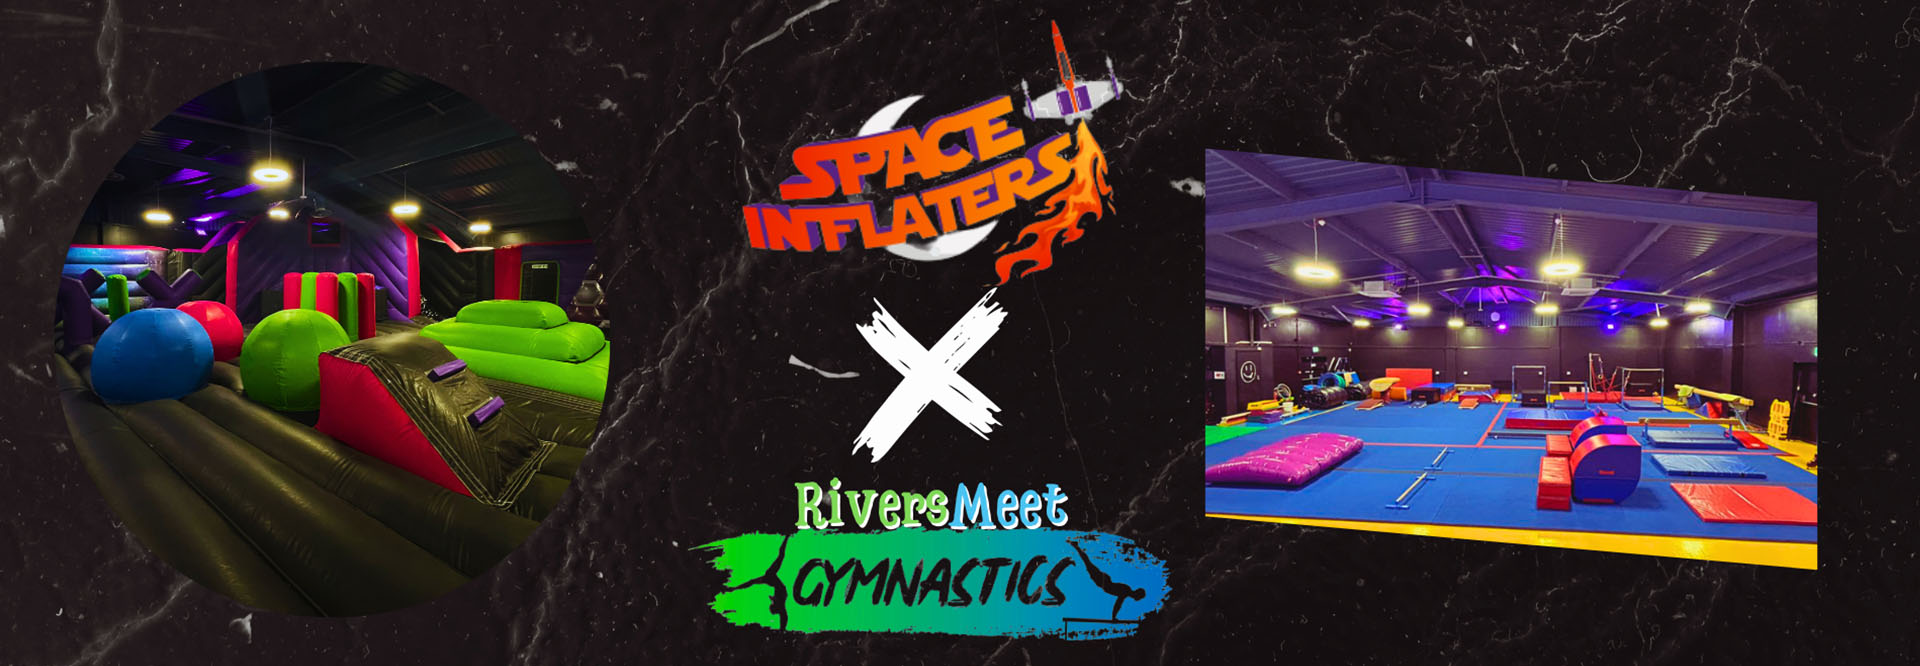 RiversMeet Gymnastics and Soft Play Banner